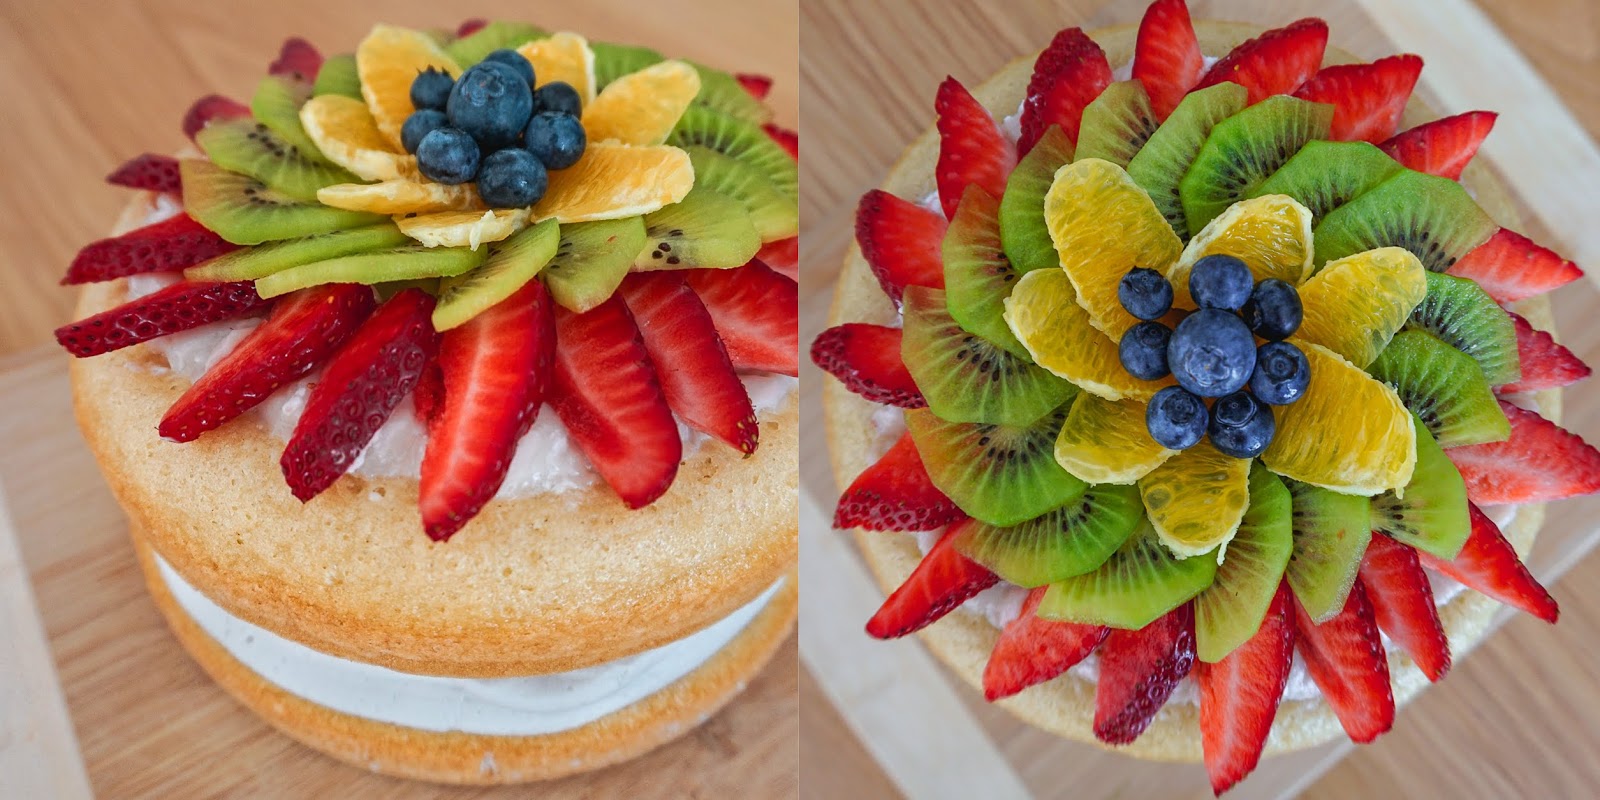 Fruit Tart Cake – A Great Layered Oil-Free Dessert